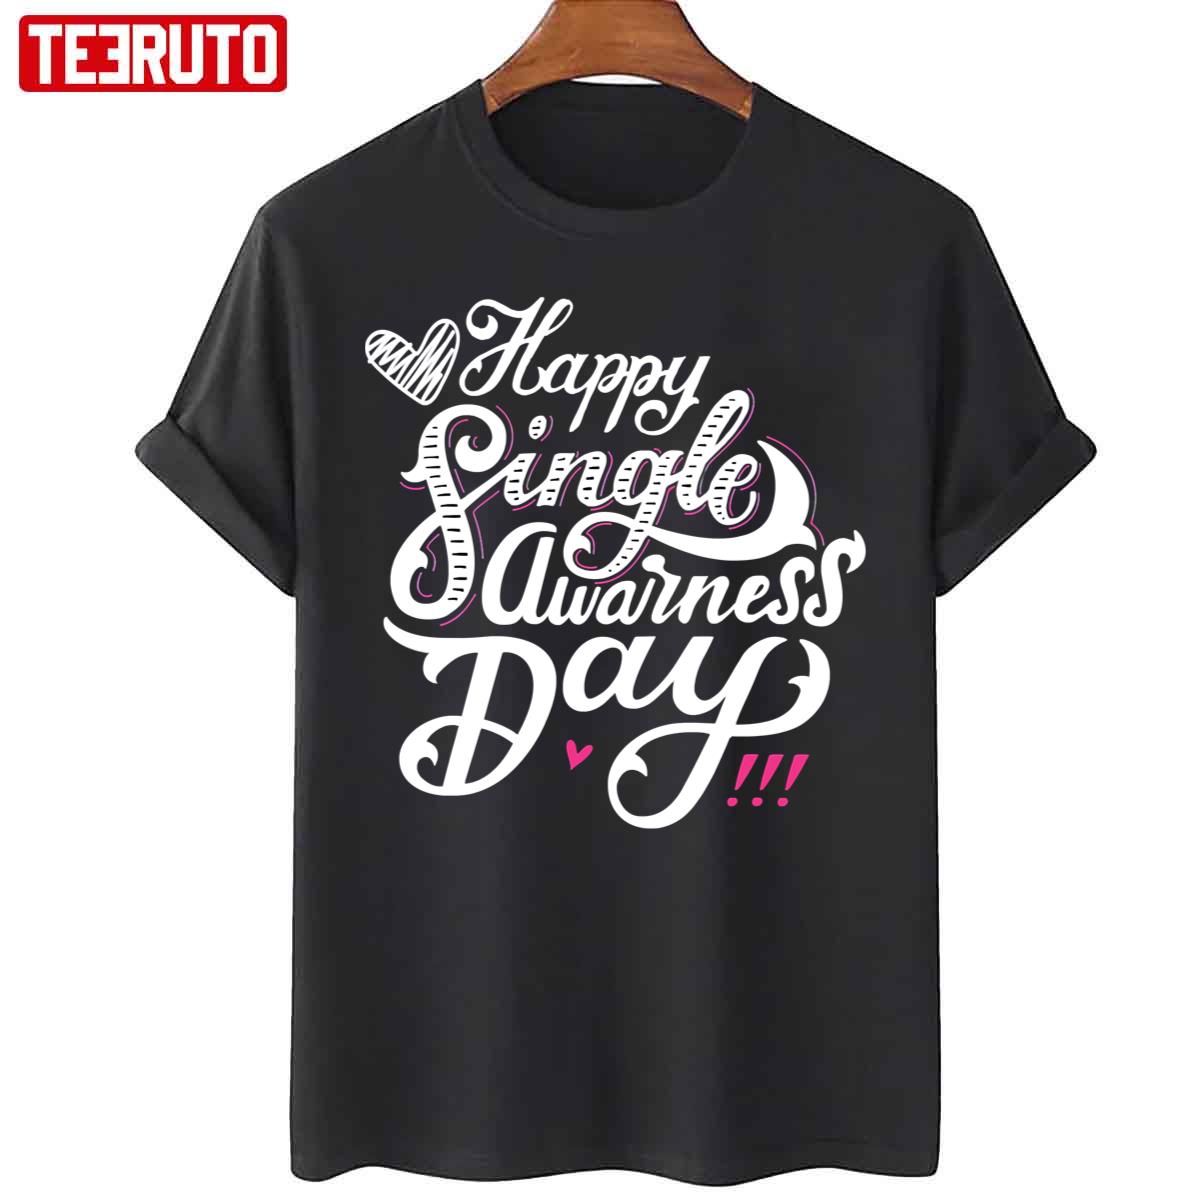 Valentine's Day Shirt Singles T-shirts Heart Breaker